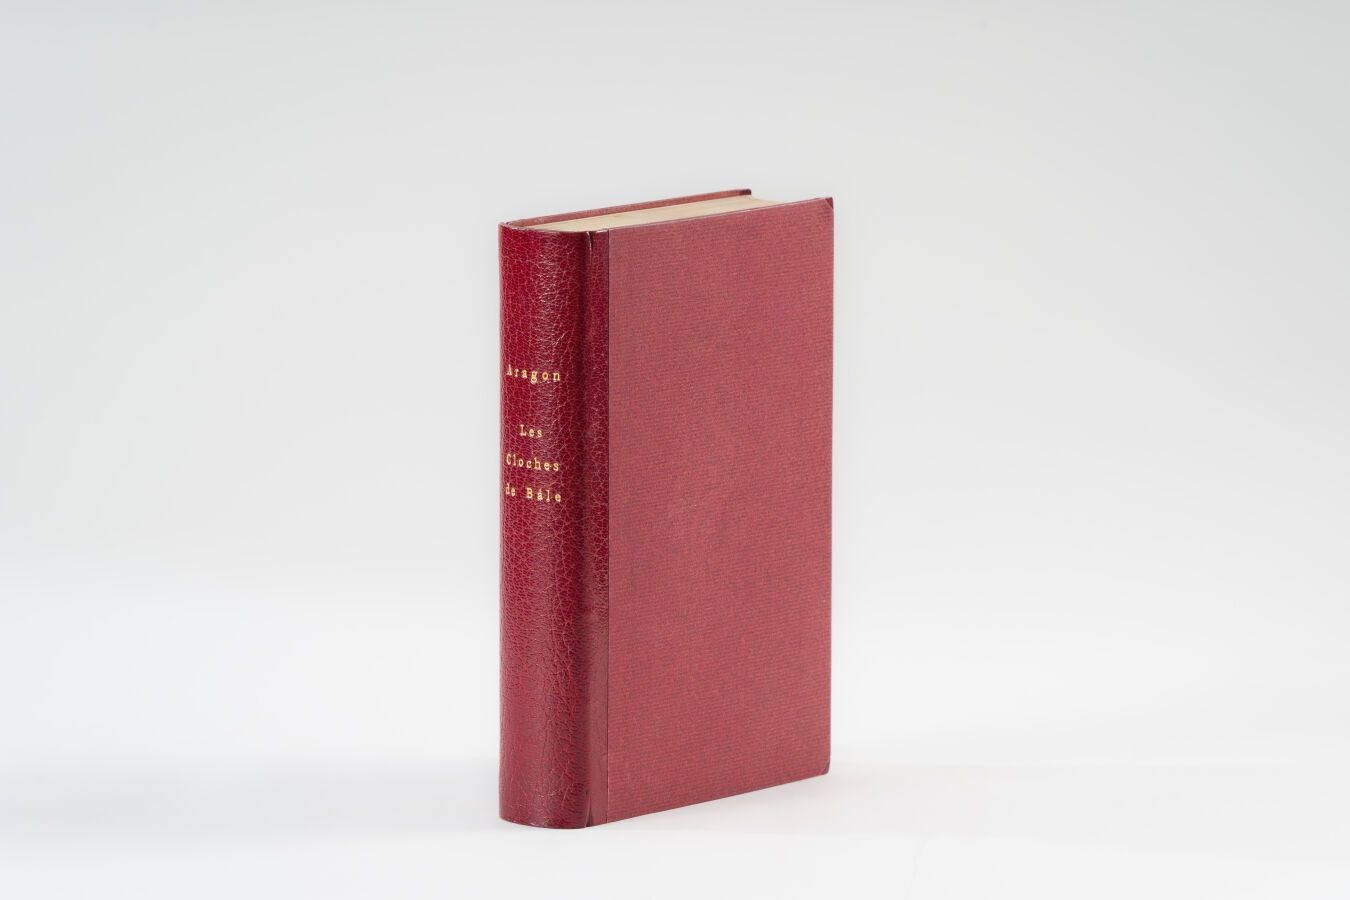 Null 17.阿拉贡（路易斯）。 
Les Cloches de Bâle.小说。巴黎，Denoël et Steele，1934年，12开本，勃艮第半马洛金&hellip;